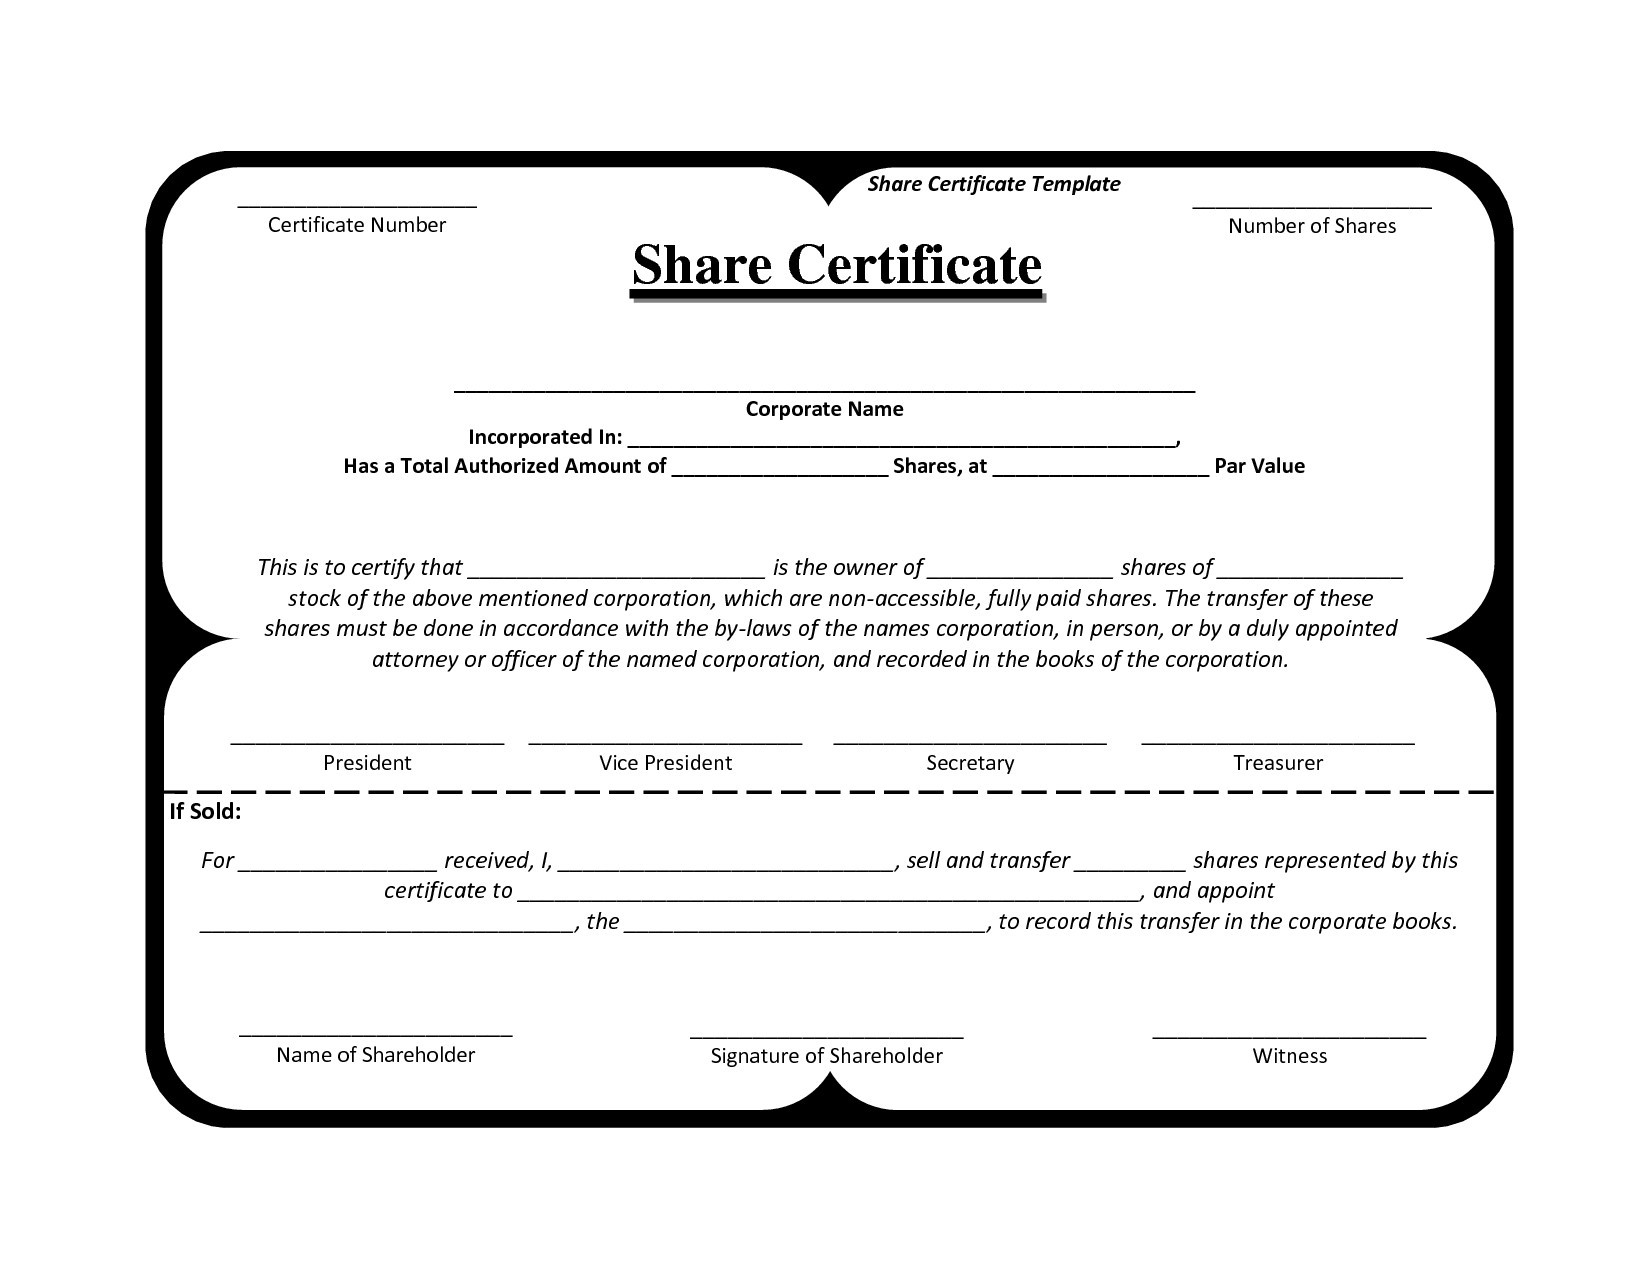 Share Certificate Template Alberta Urgent Request Letter Sample Best